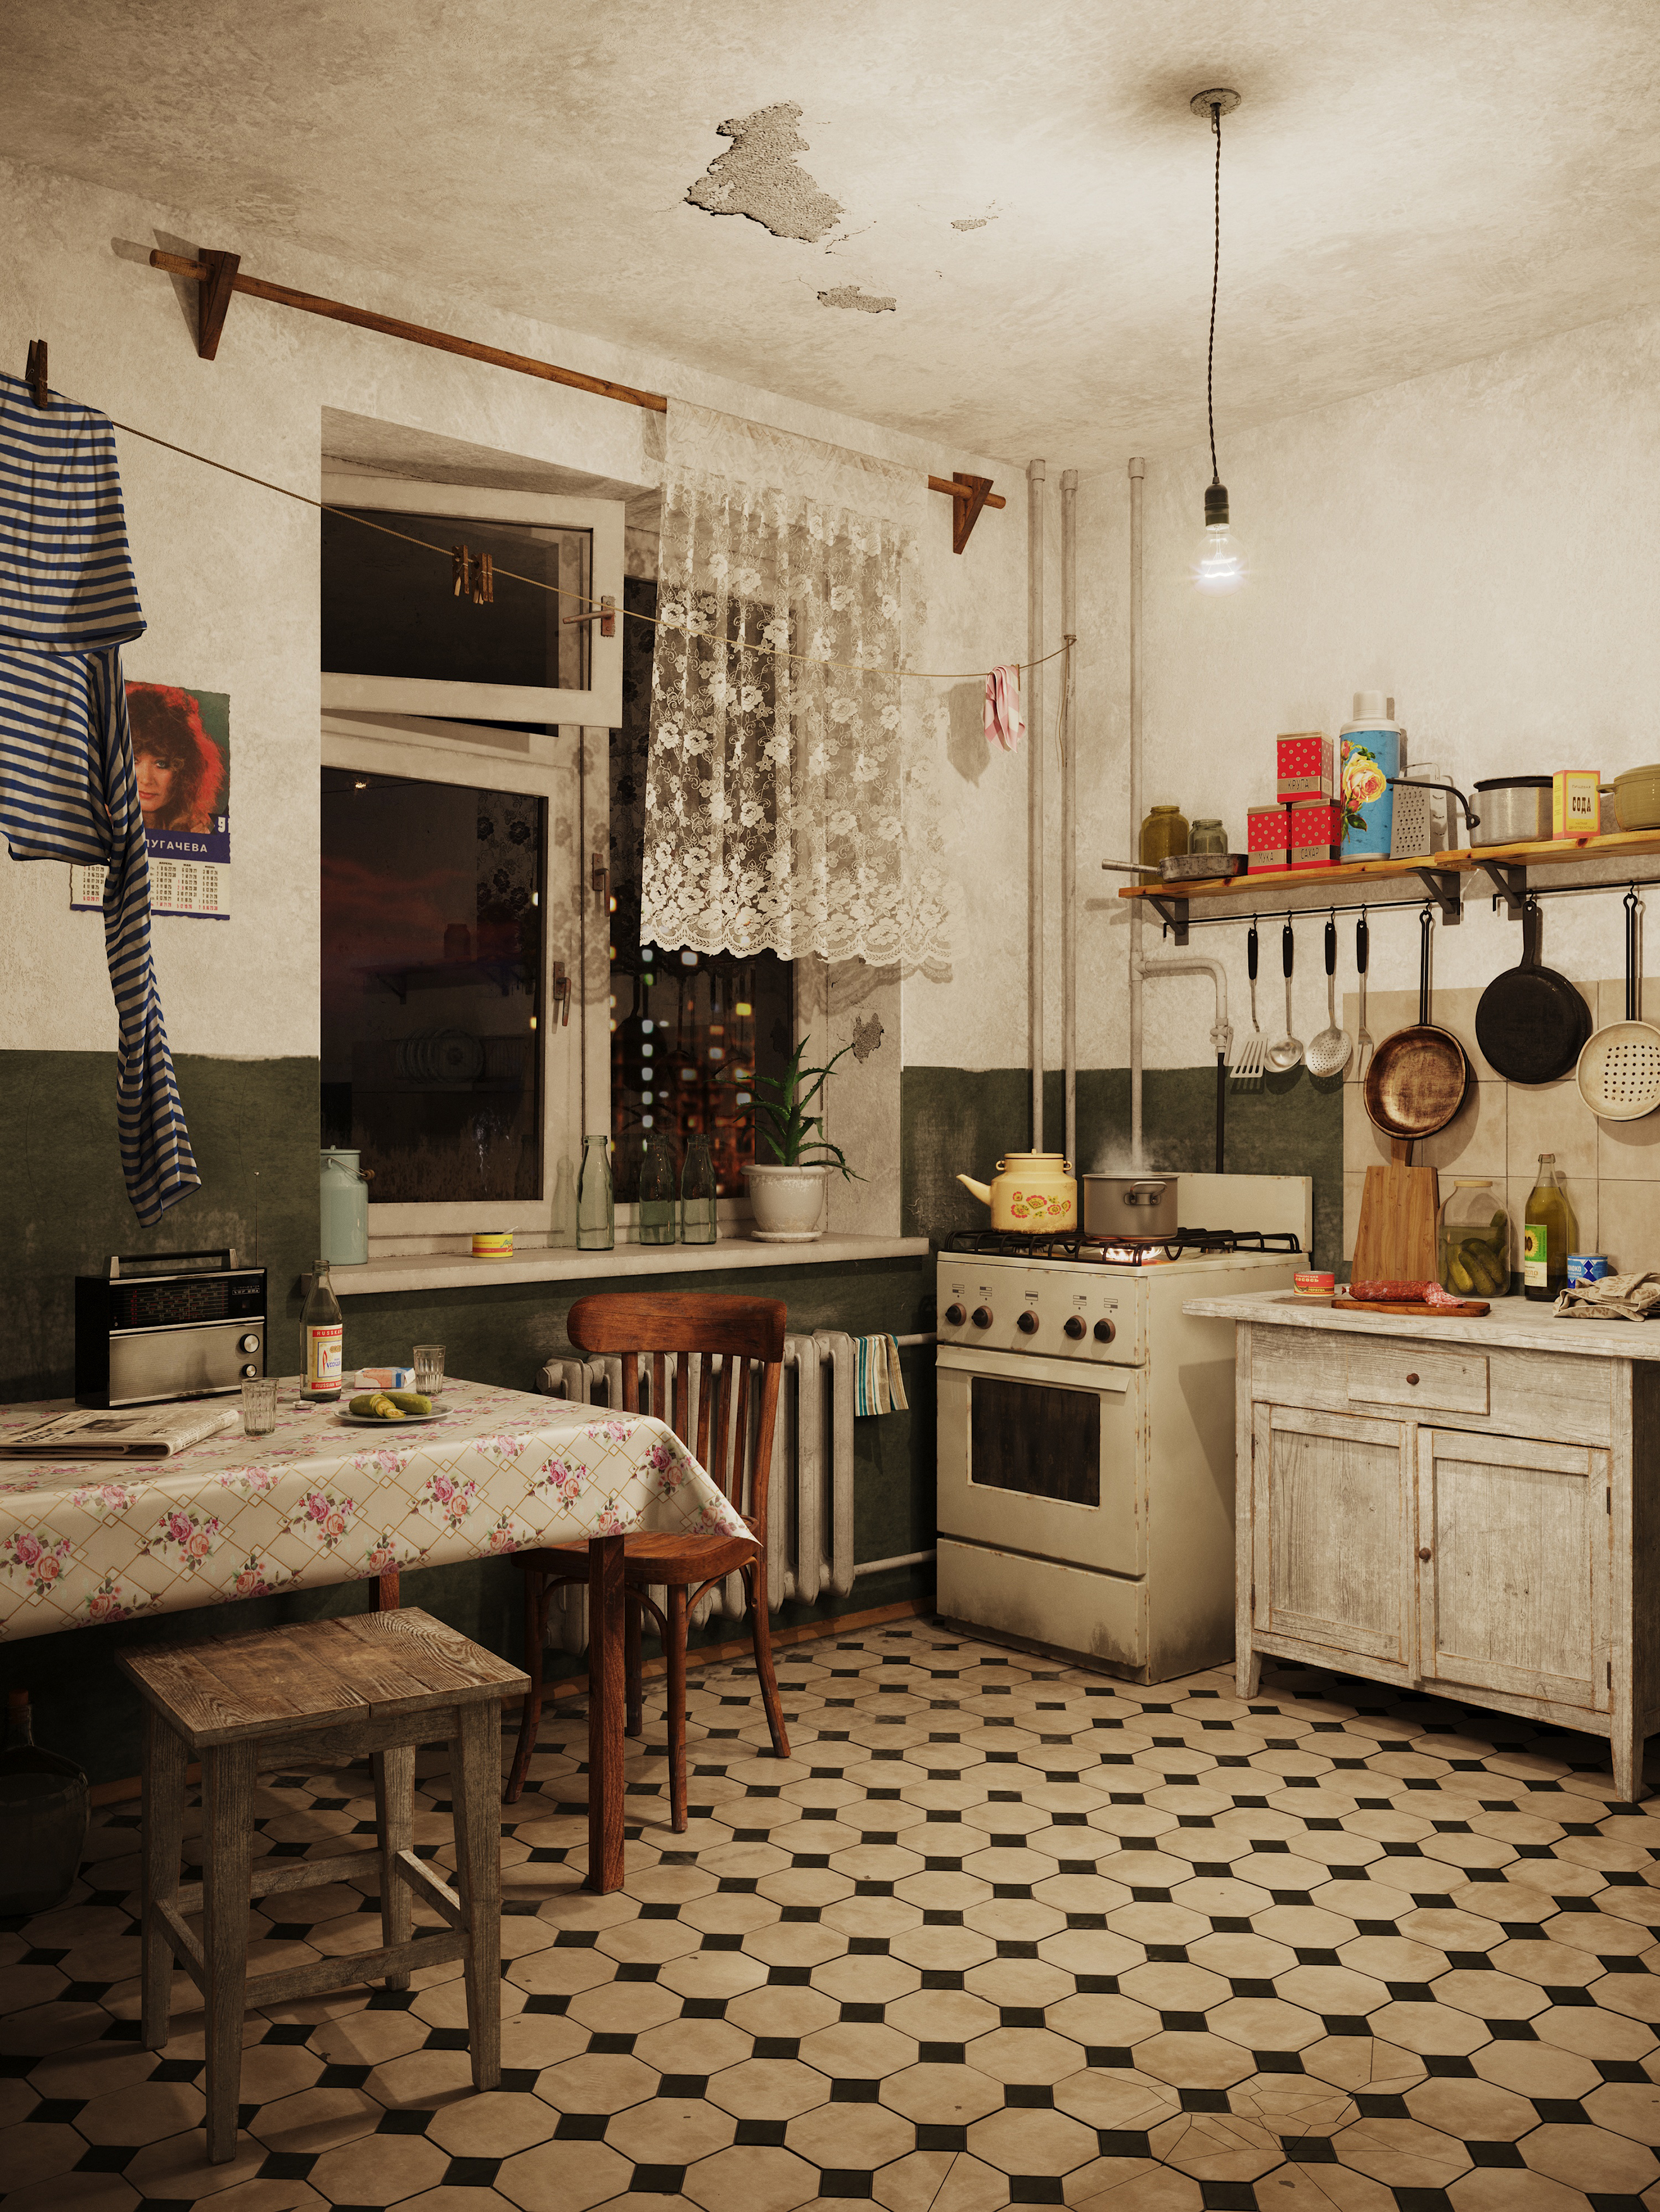 Коммуналка. Советская кухня. Старинная кухня. Кухня в Советской квартире. Кухня в стиле ретро.